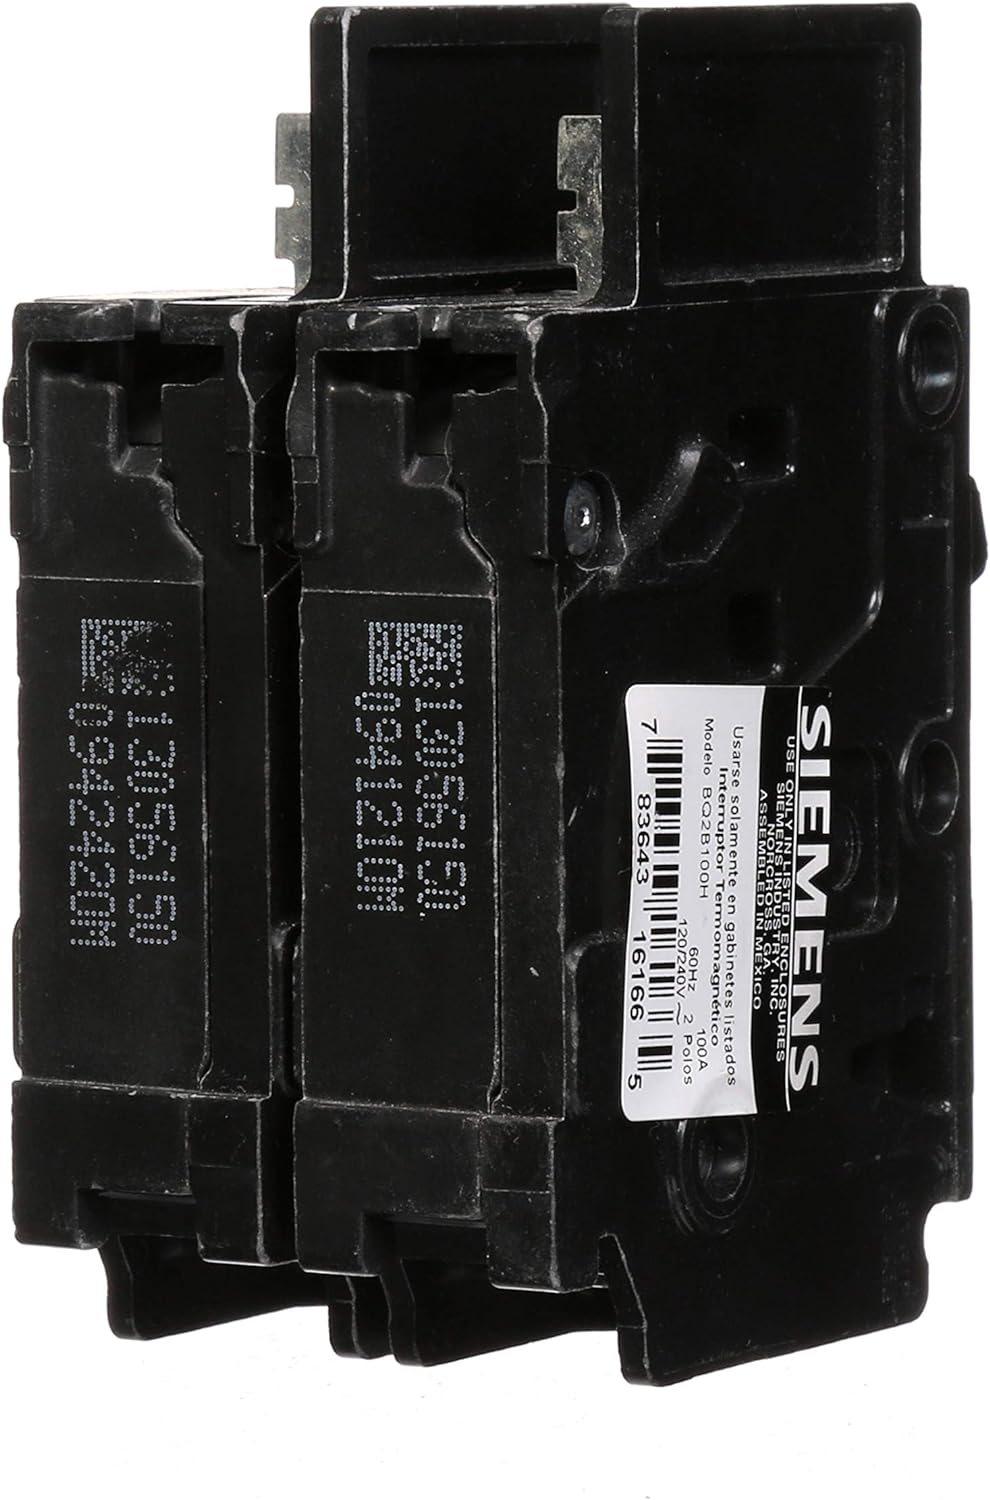 BQ2B040H - Siemens - 40 Amp Molded Case Circuit Breaker